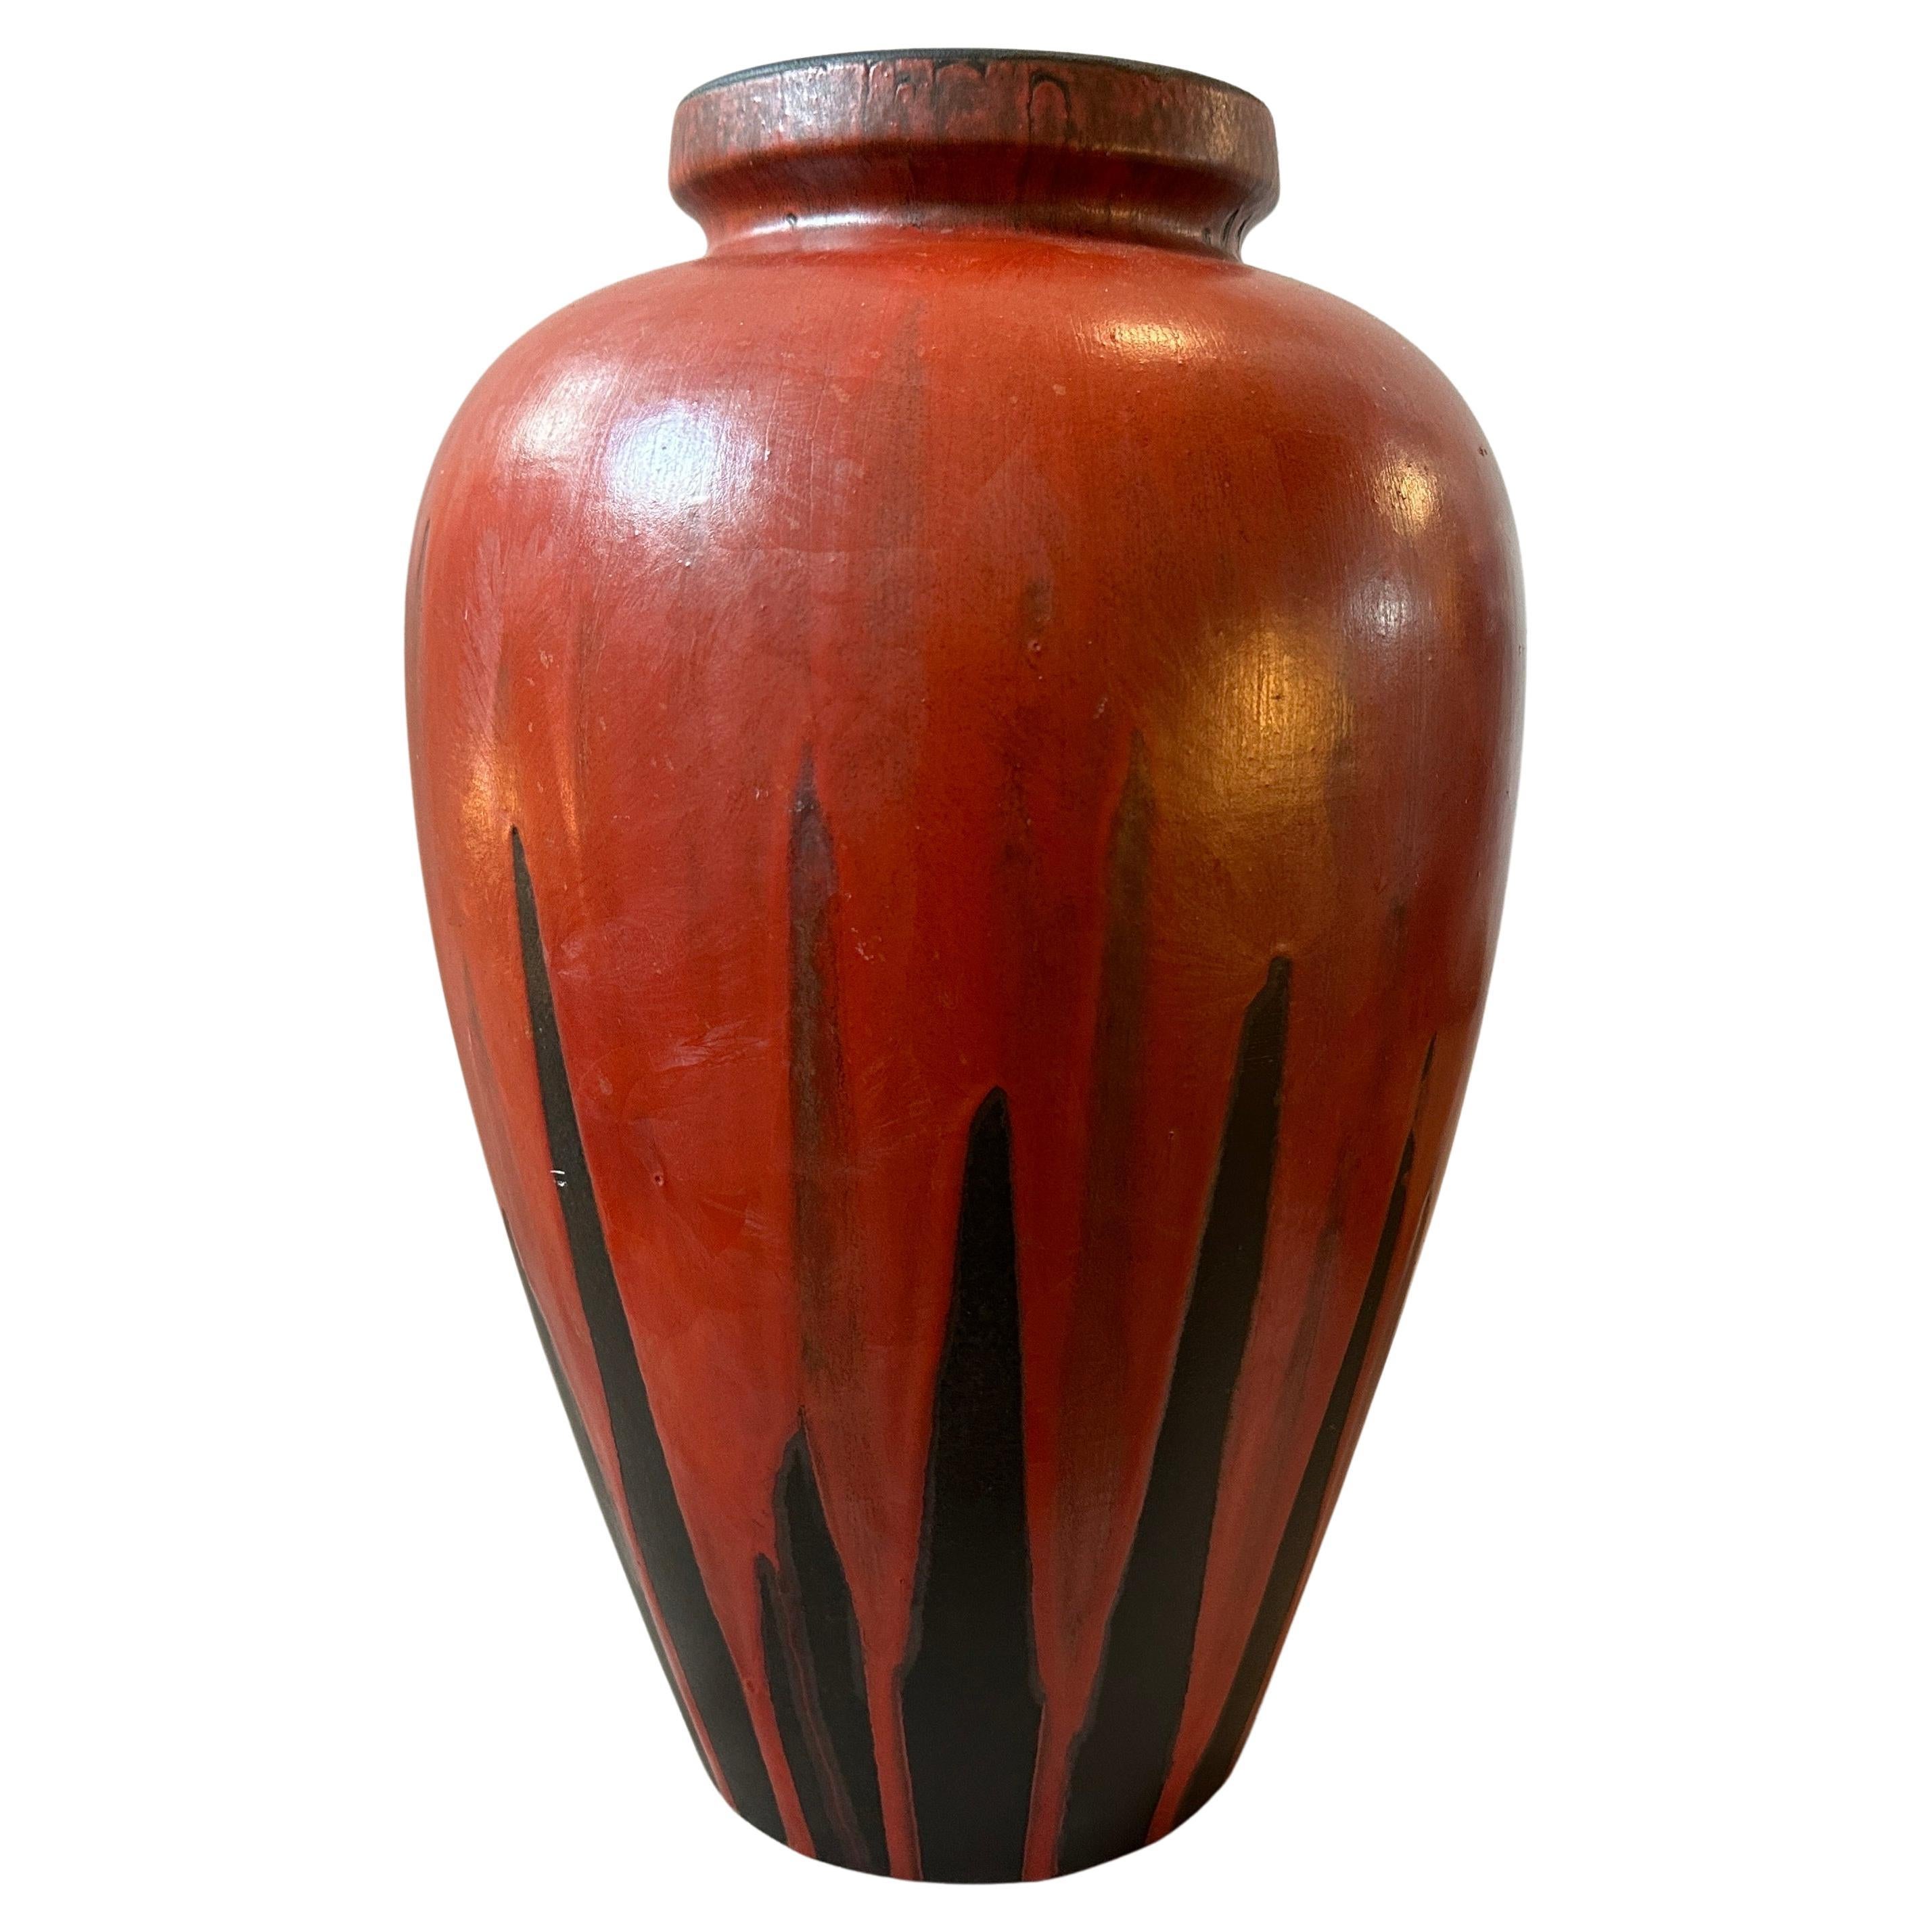 1976 Modernist Red and black Fat Lava Ceramic Stromboli Big Vase by Ceramano For Sale